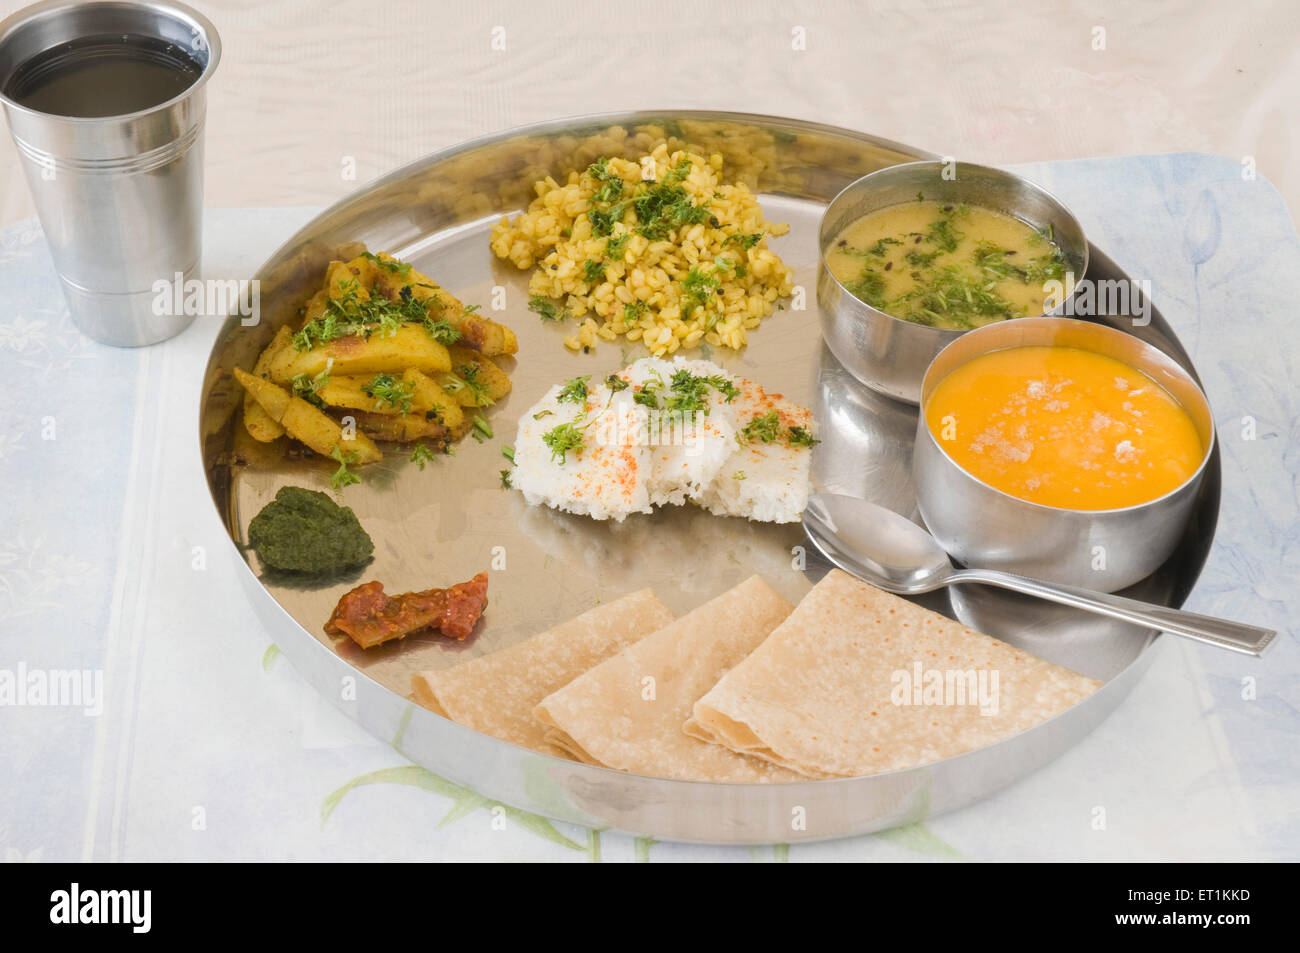 Gujarati food including various items steel plate Pune Maharashtra India Asia May 2011 Stock Photo